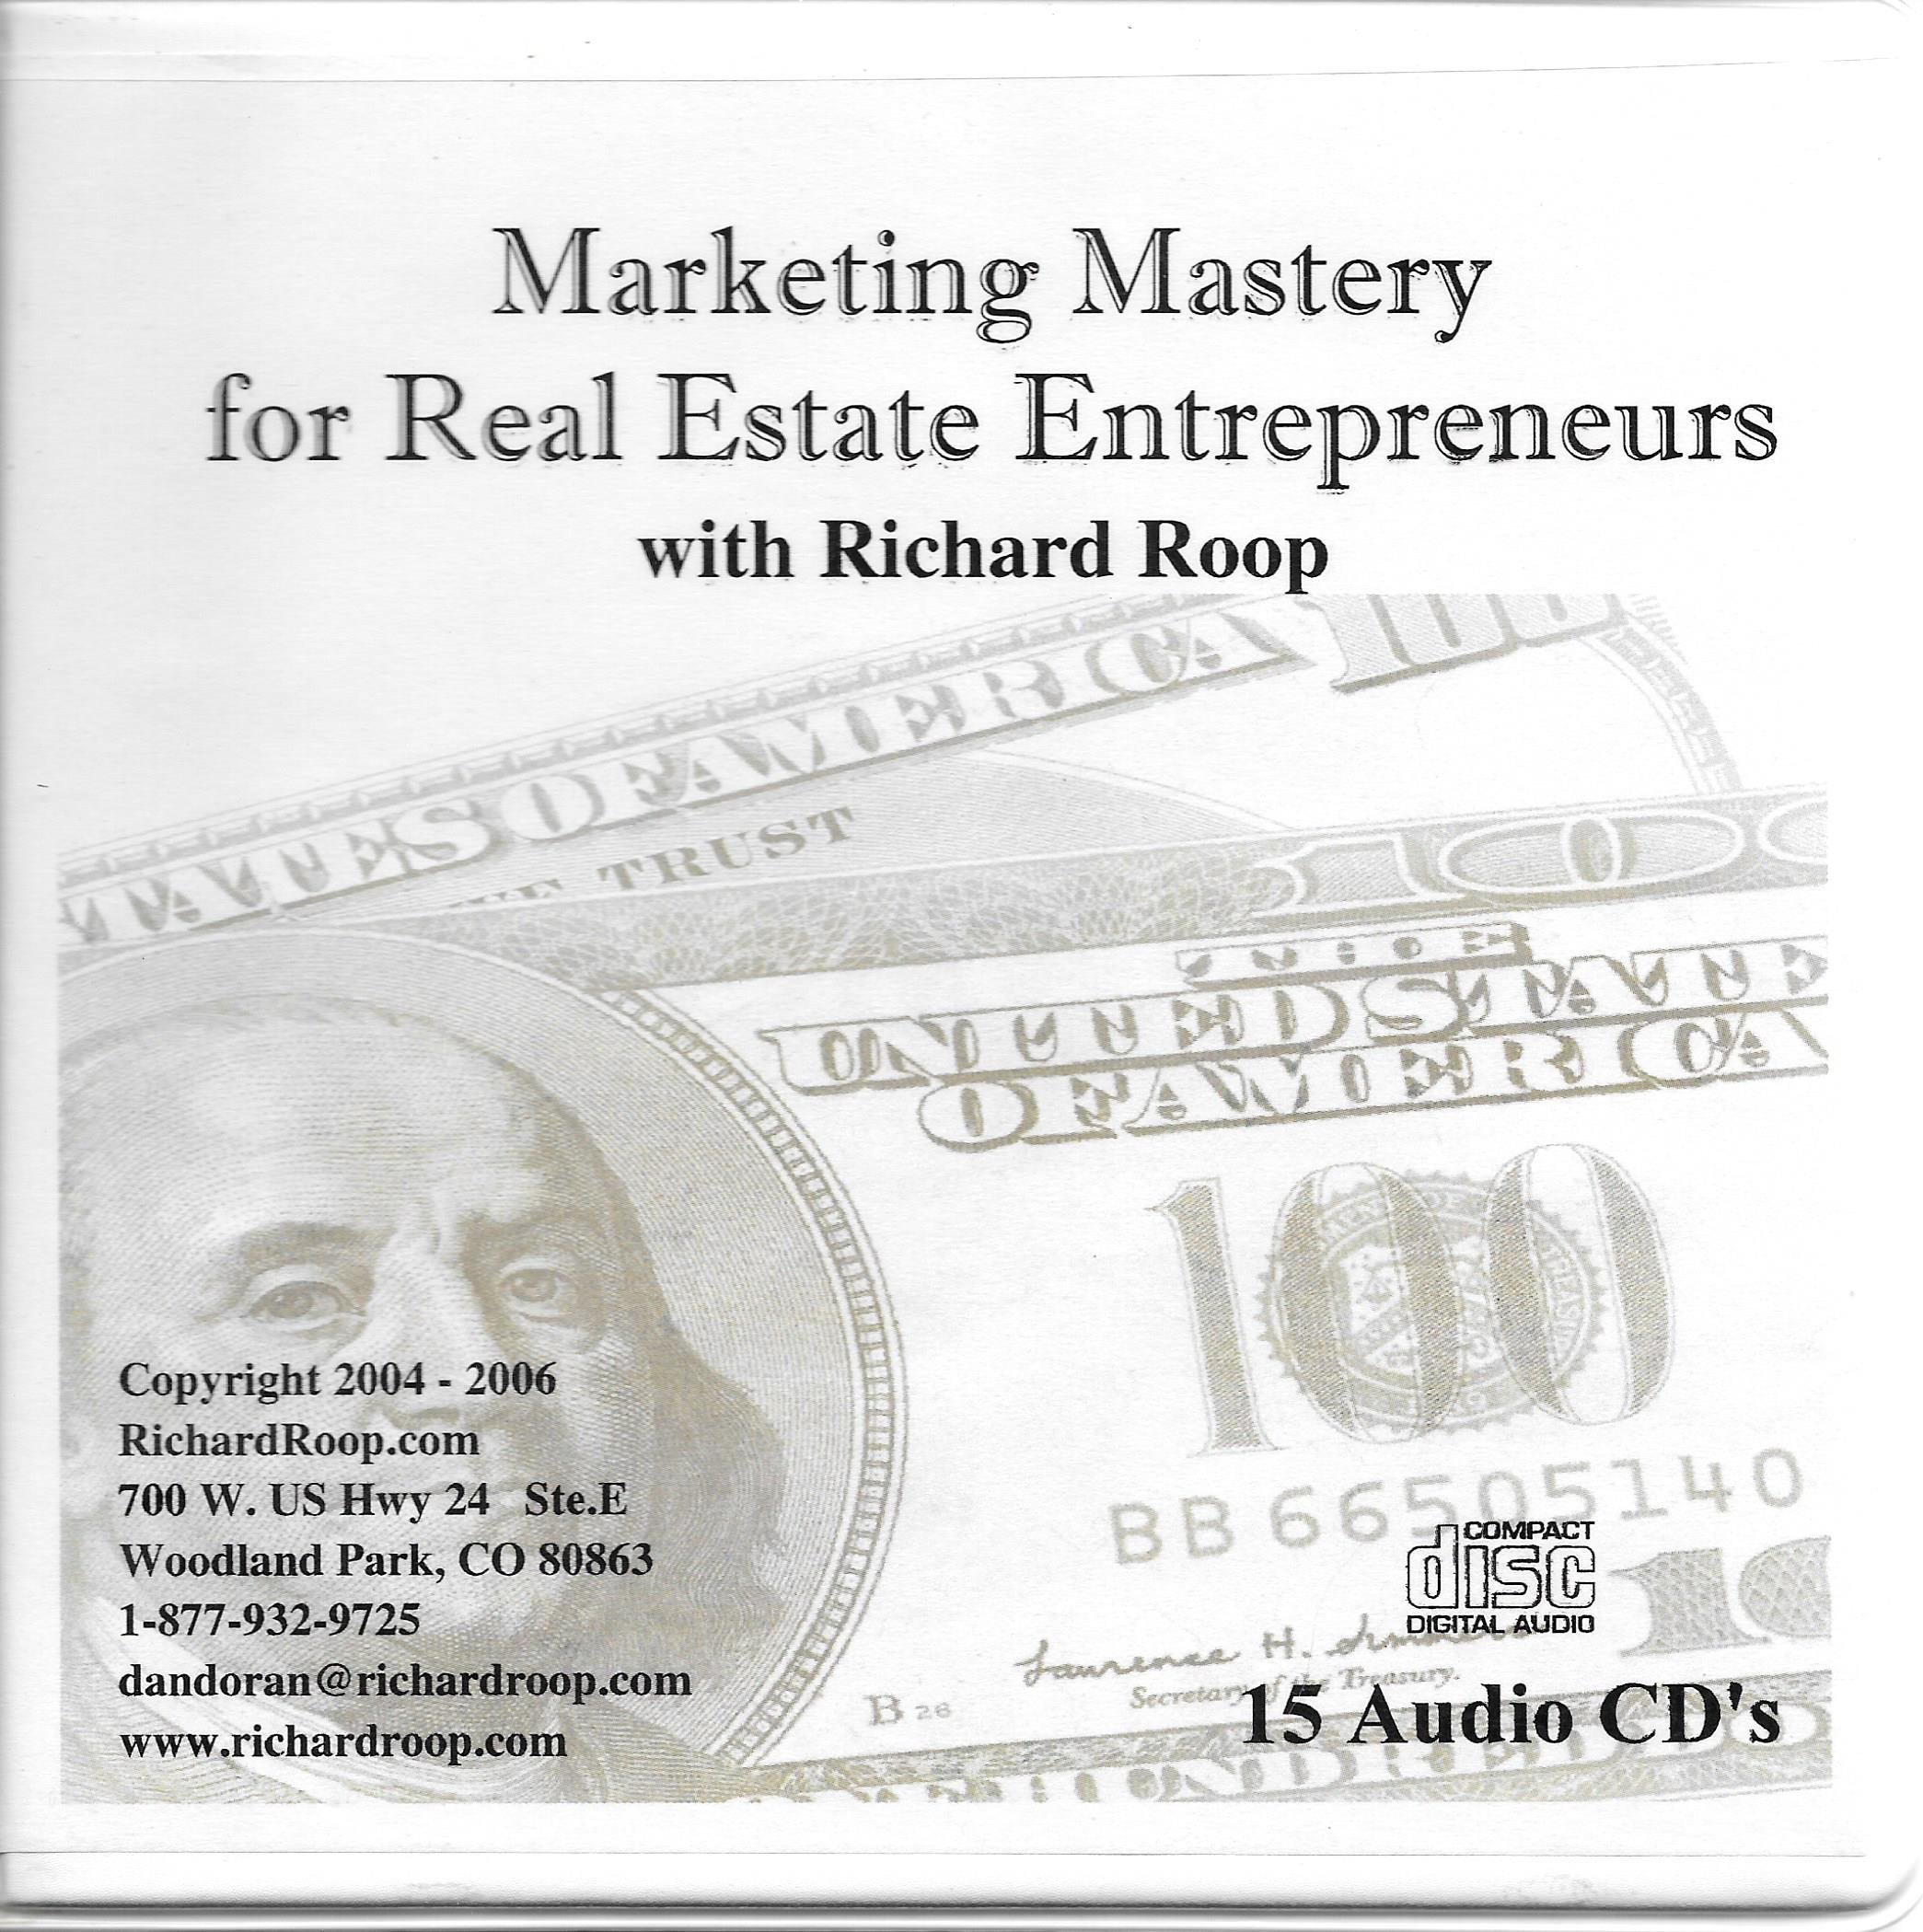 Richard Roop - Marketing Mastery for Real Estate Entrepreneurs